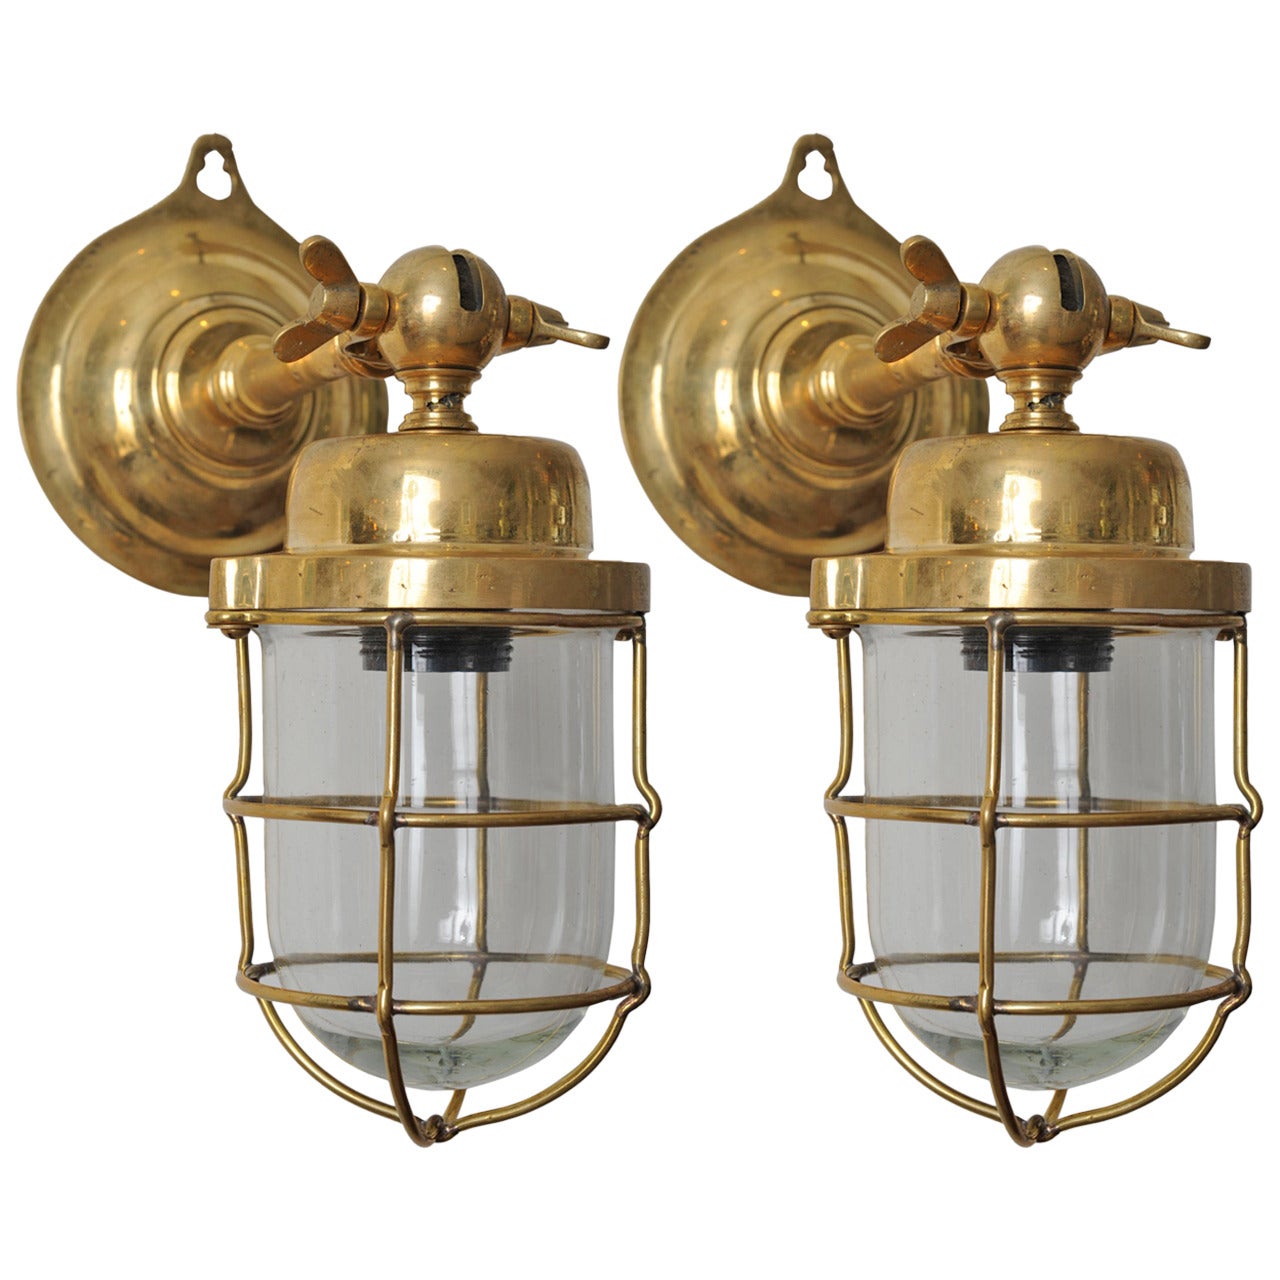 Pair of Nautical Antique Ship Passageway Lights in Brass, Mid-Century